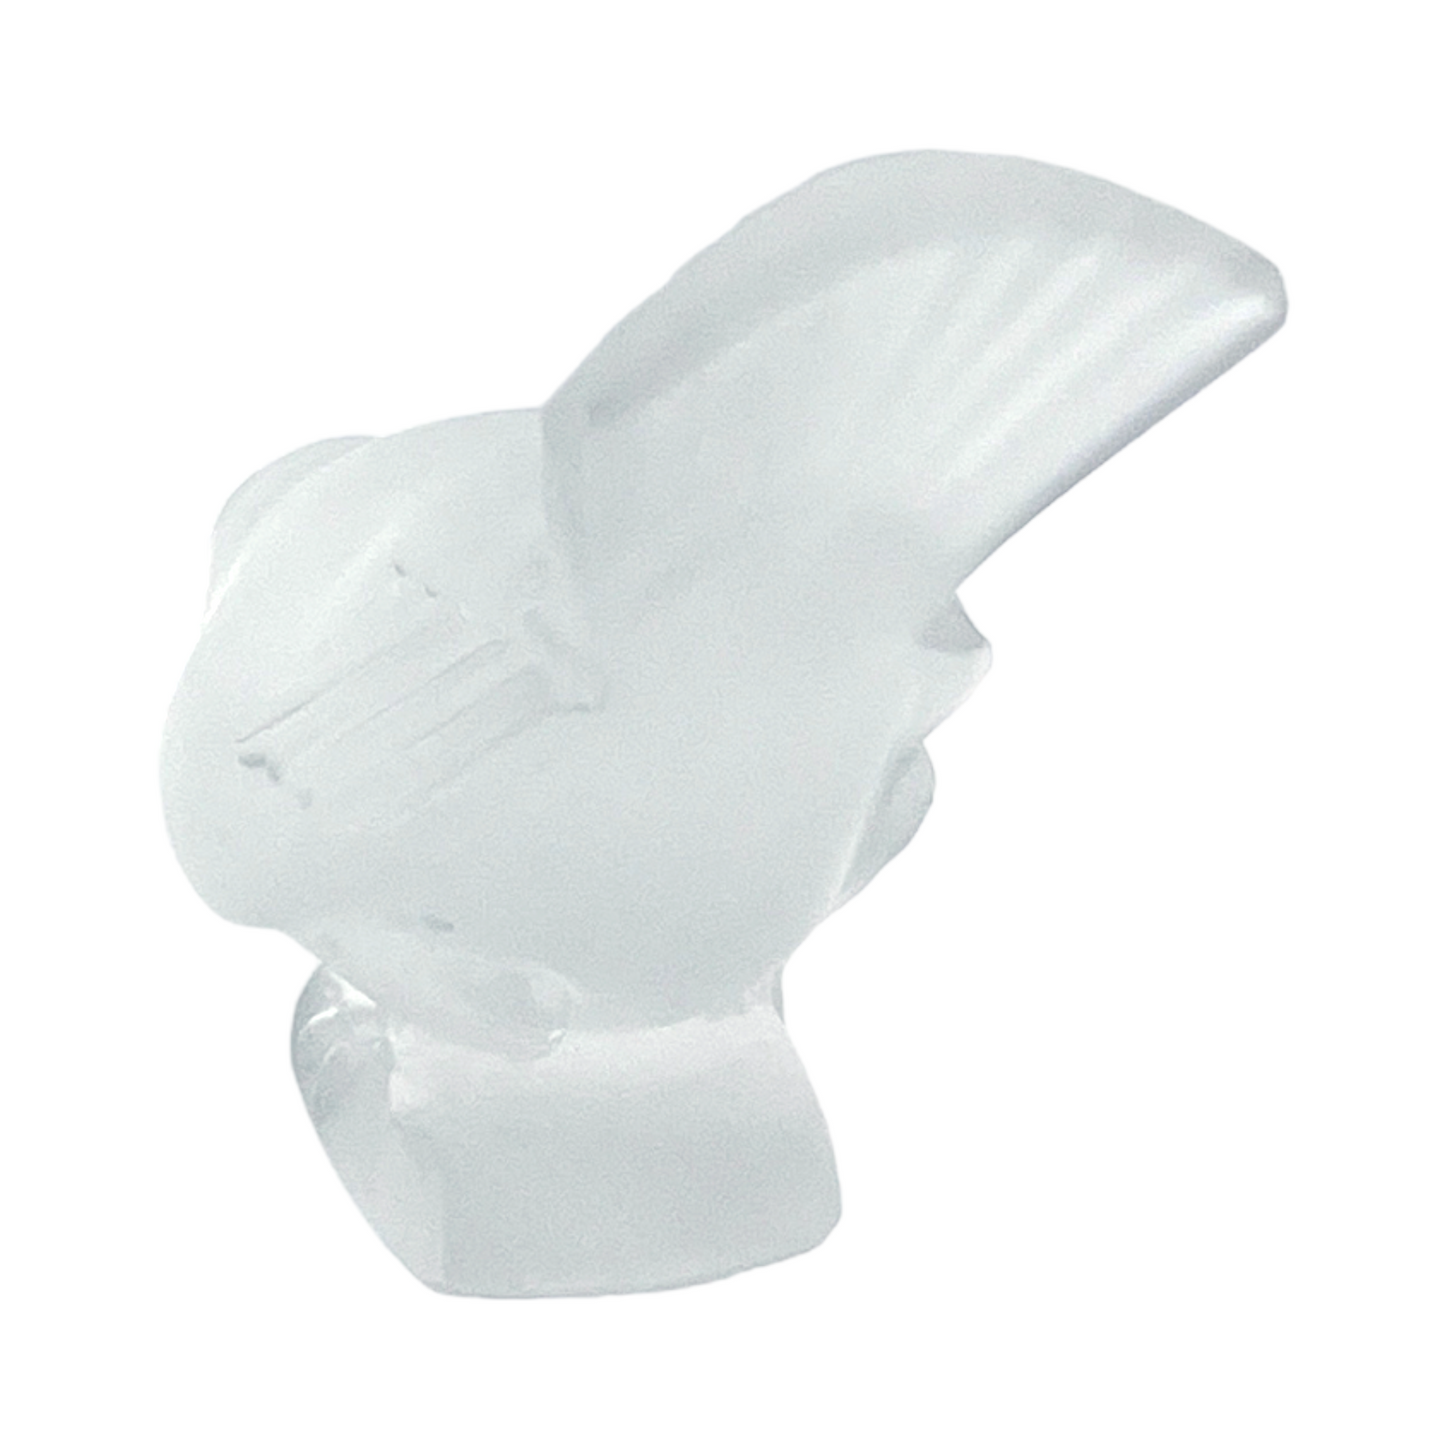 Lalique Crystal - Sparrow Head Down Figurine - Signed Lalique - 4"